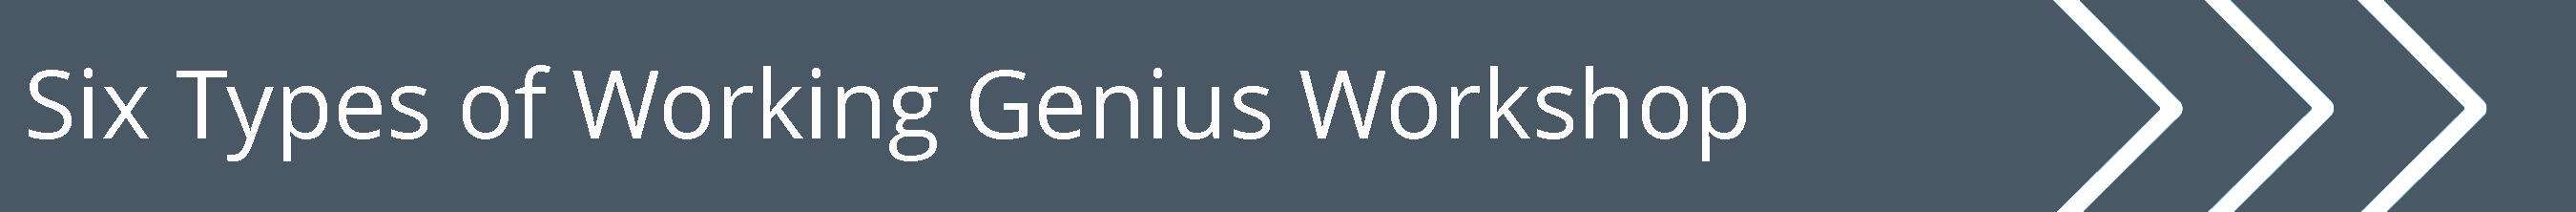 Six Types of Working Genius Workshop banner